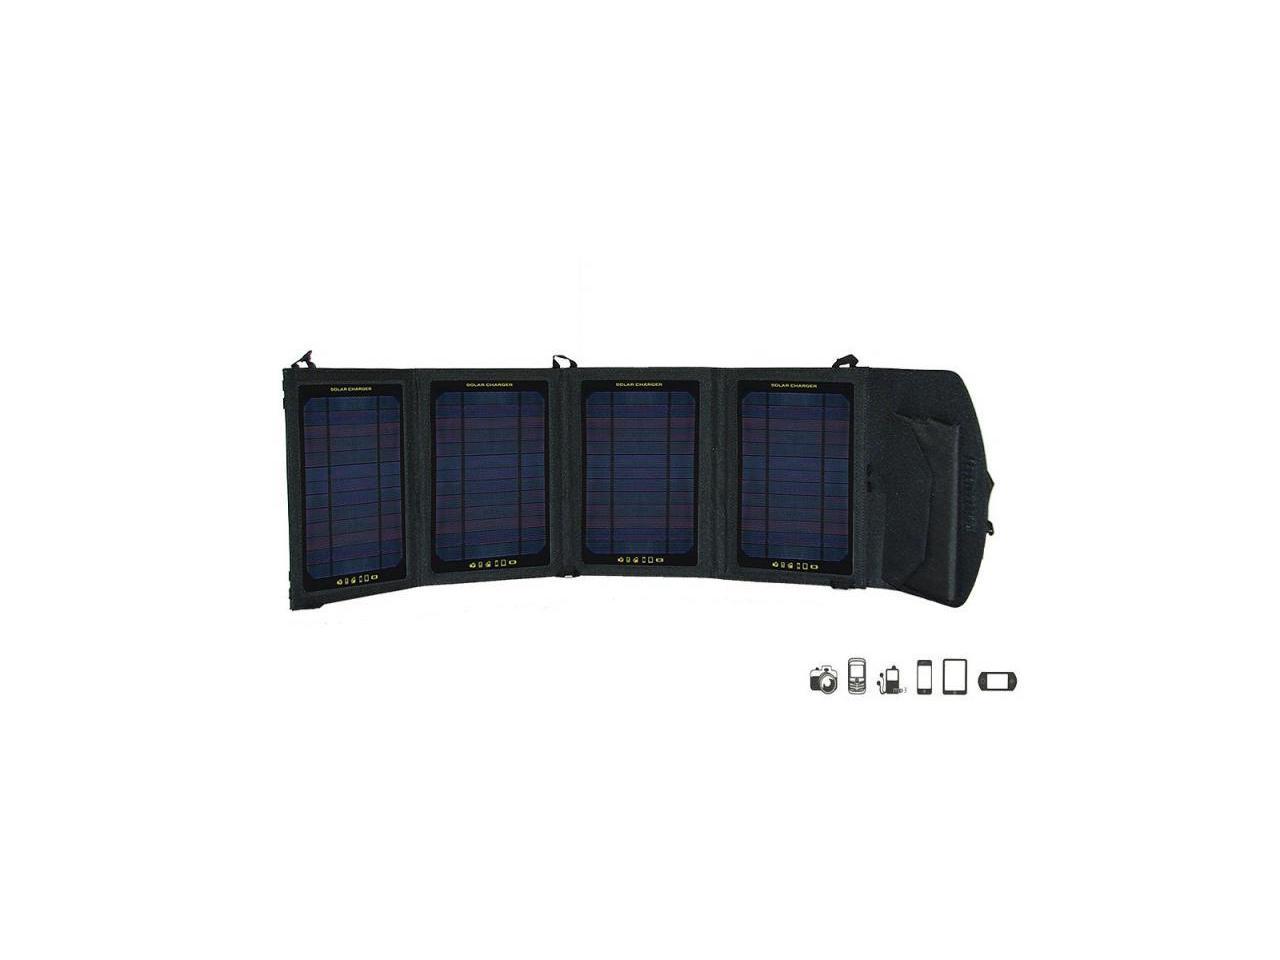 EyezOff SP8 Foldable Solar Panel Pack (14W Capacity) 5V/2.2A Output